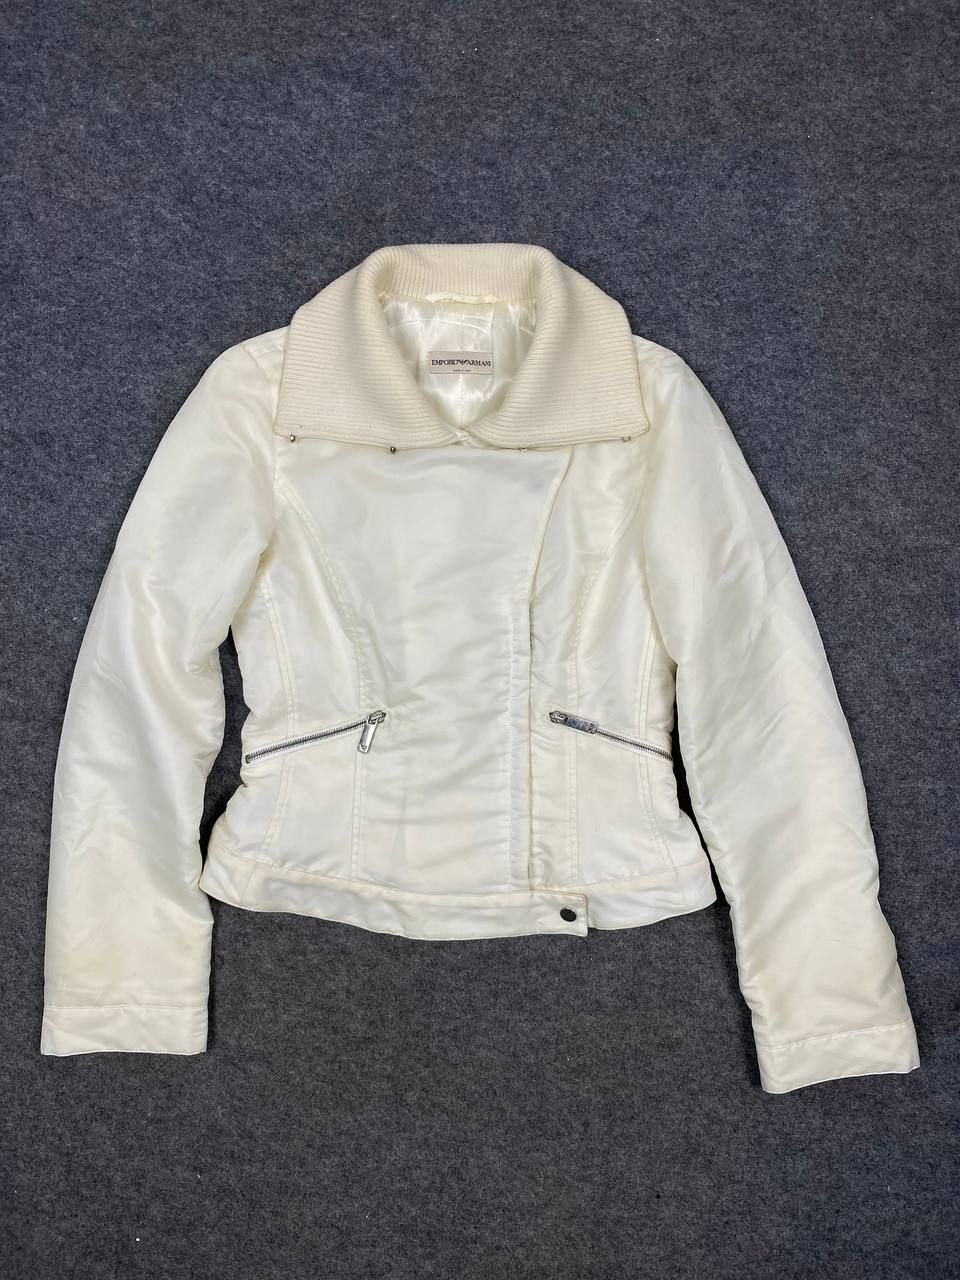 Archival Clothing vintage emporio armani white jacket nice design | Grailed